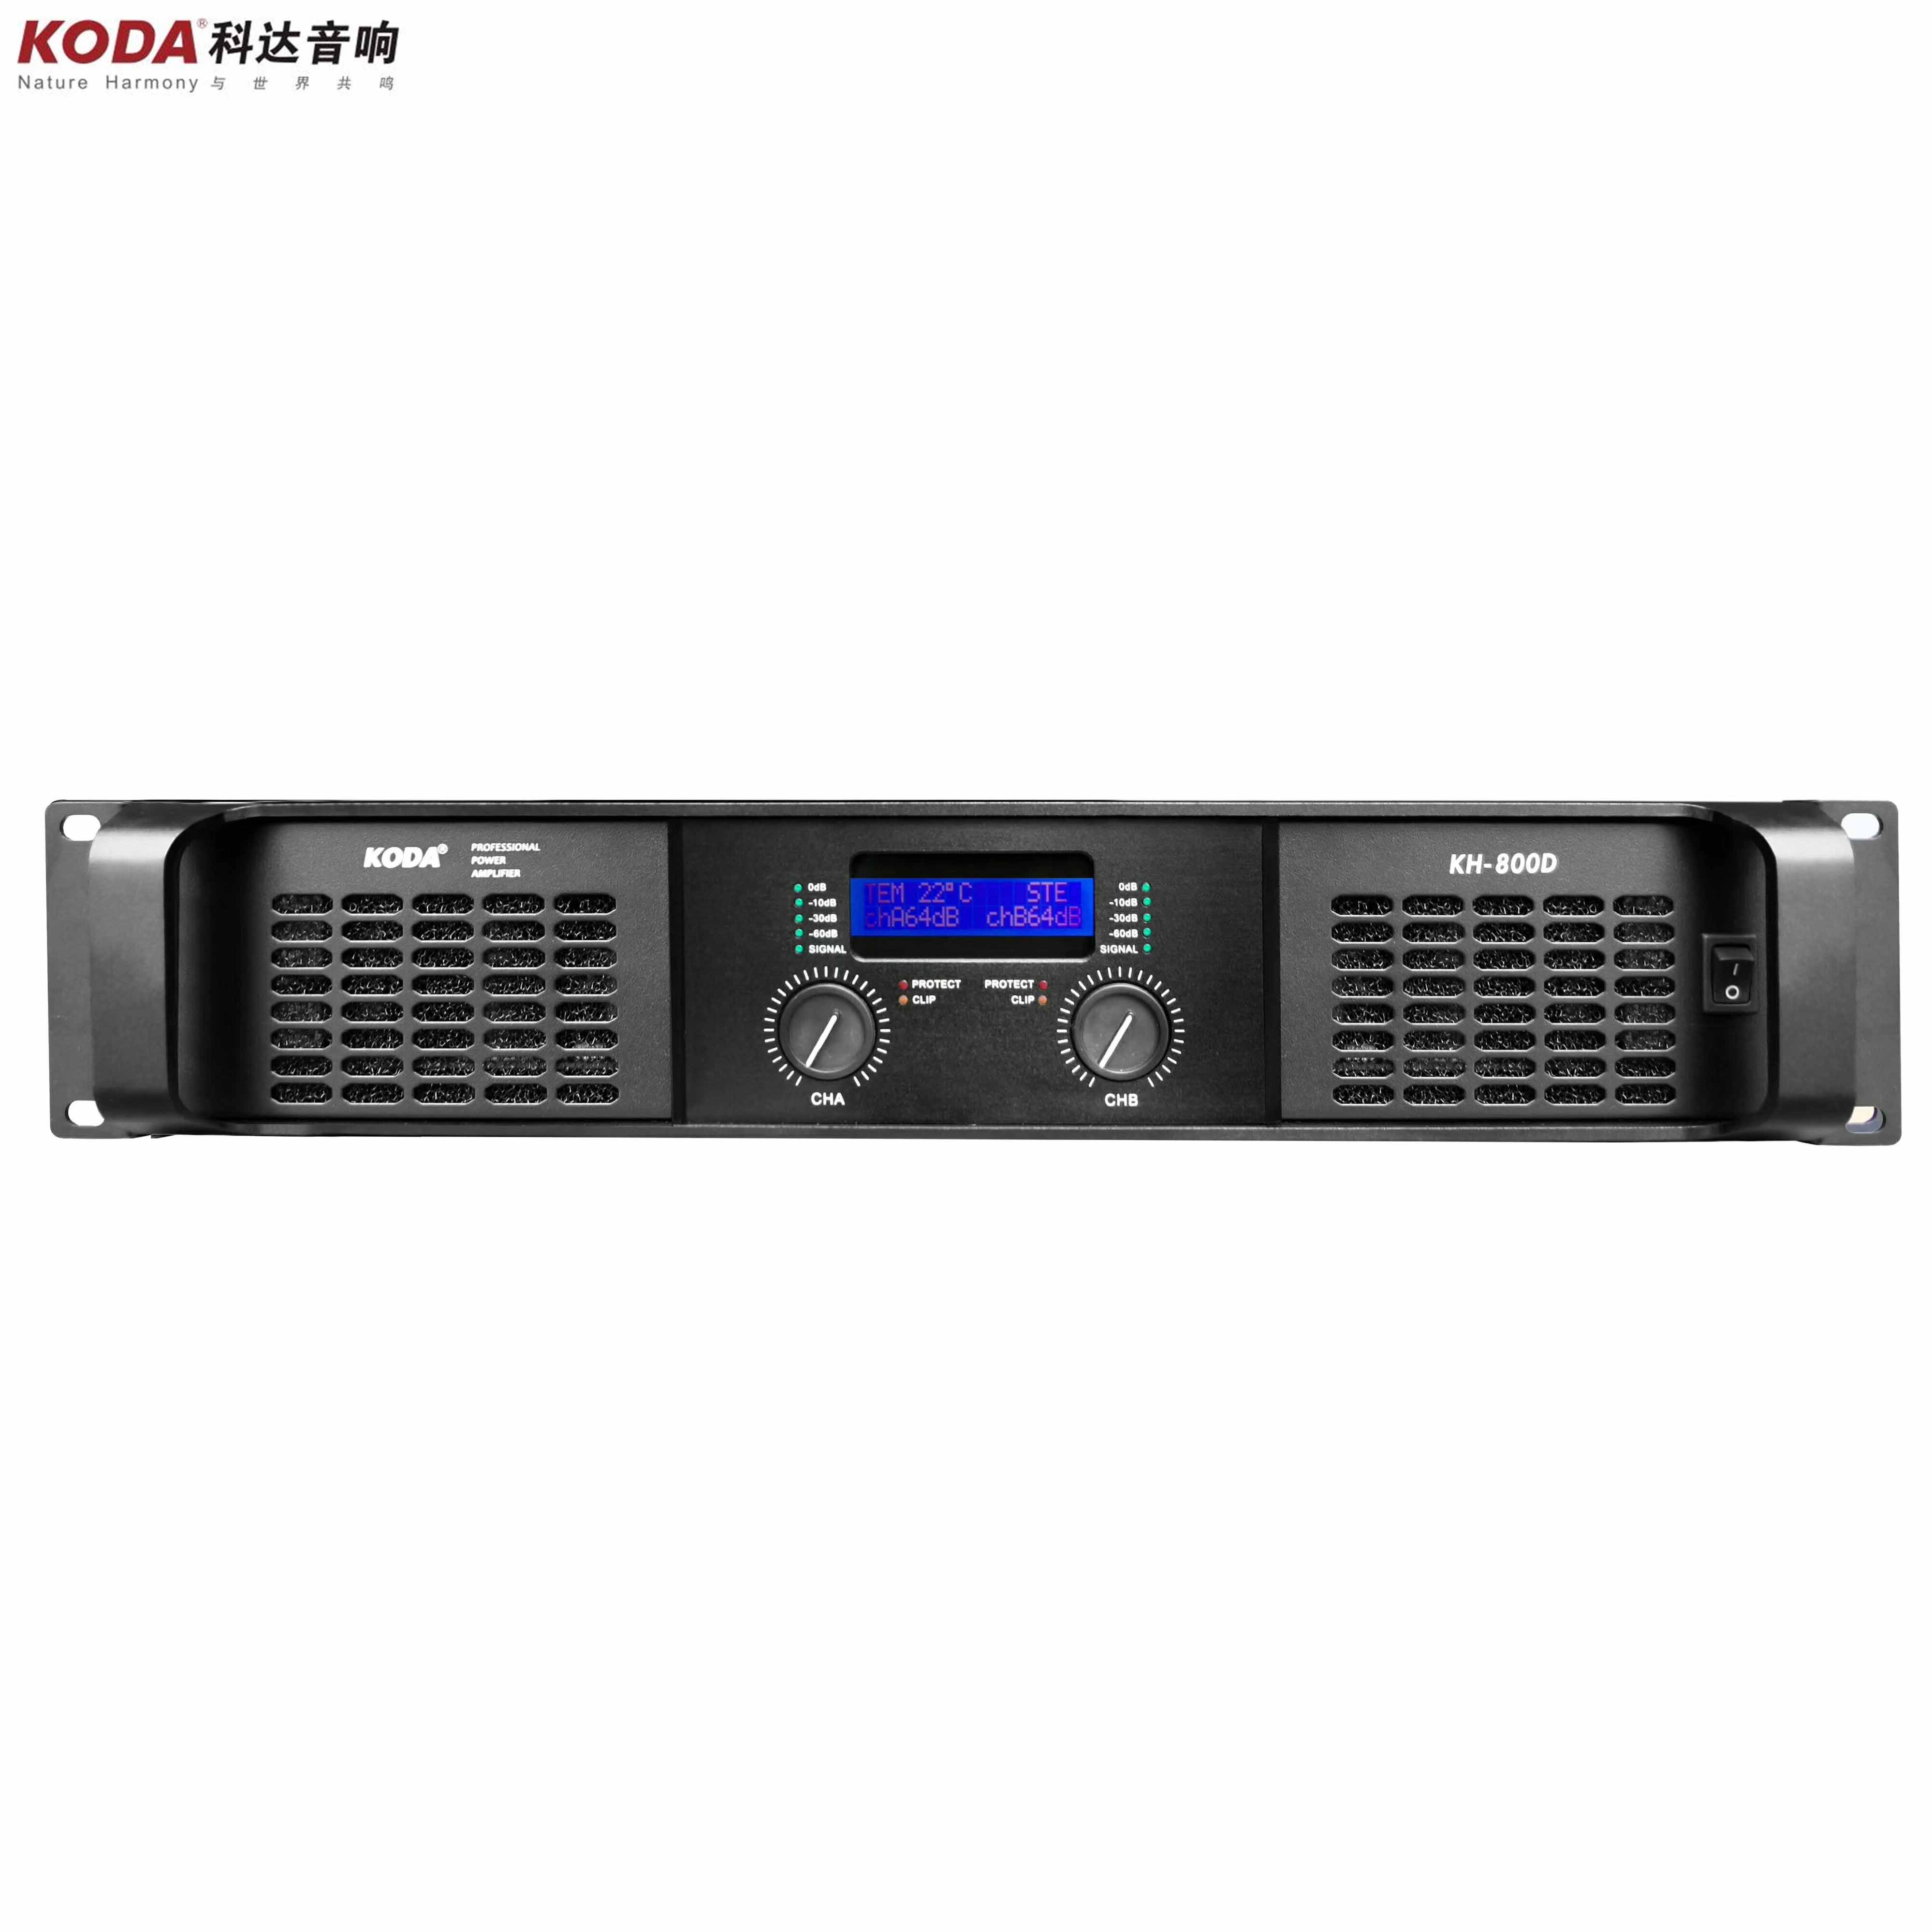 Amplifier KODA KH-800D